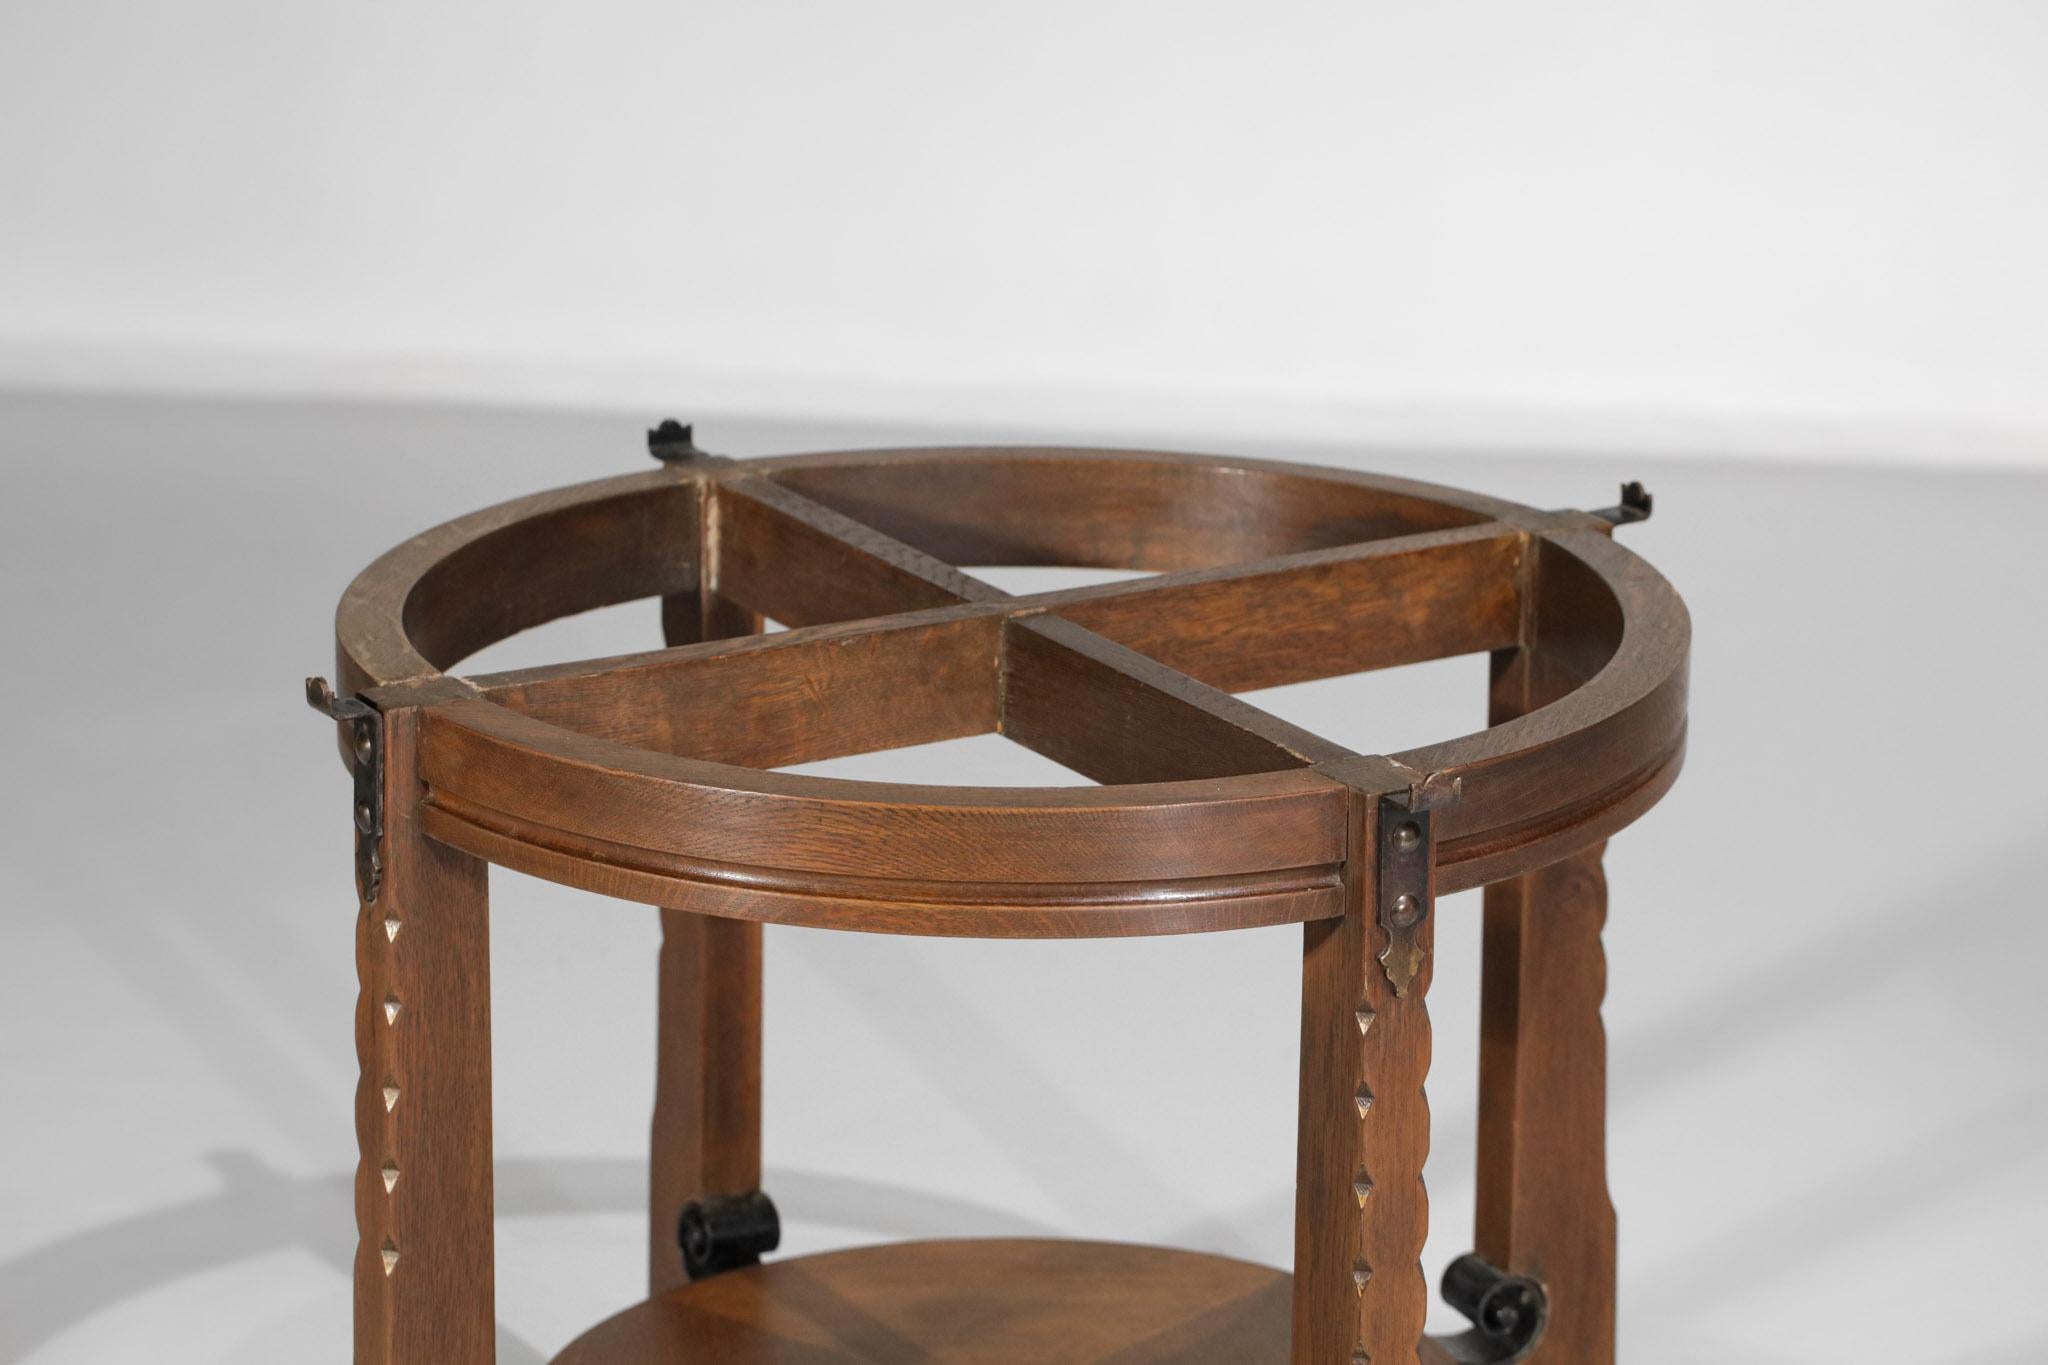 Oak and Travertine Art Deco Coffee Table 1930's Gueridon, E556 For Sale 3